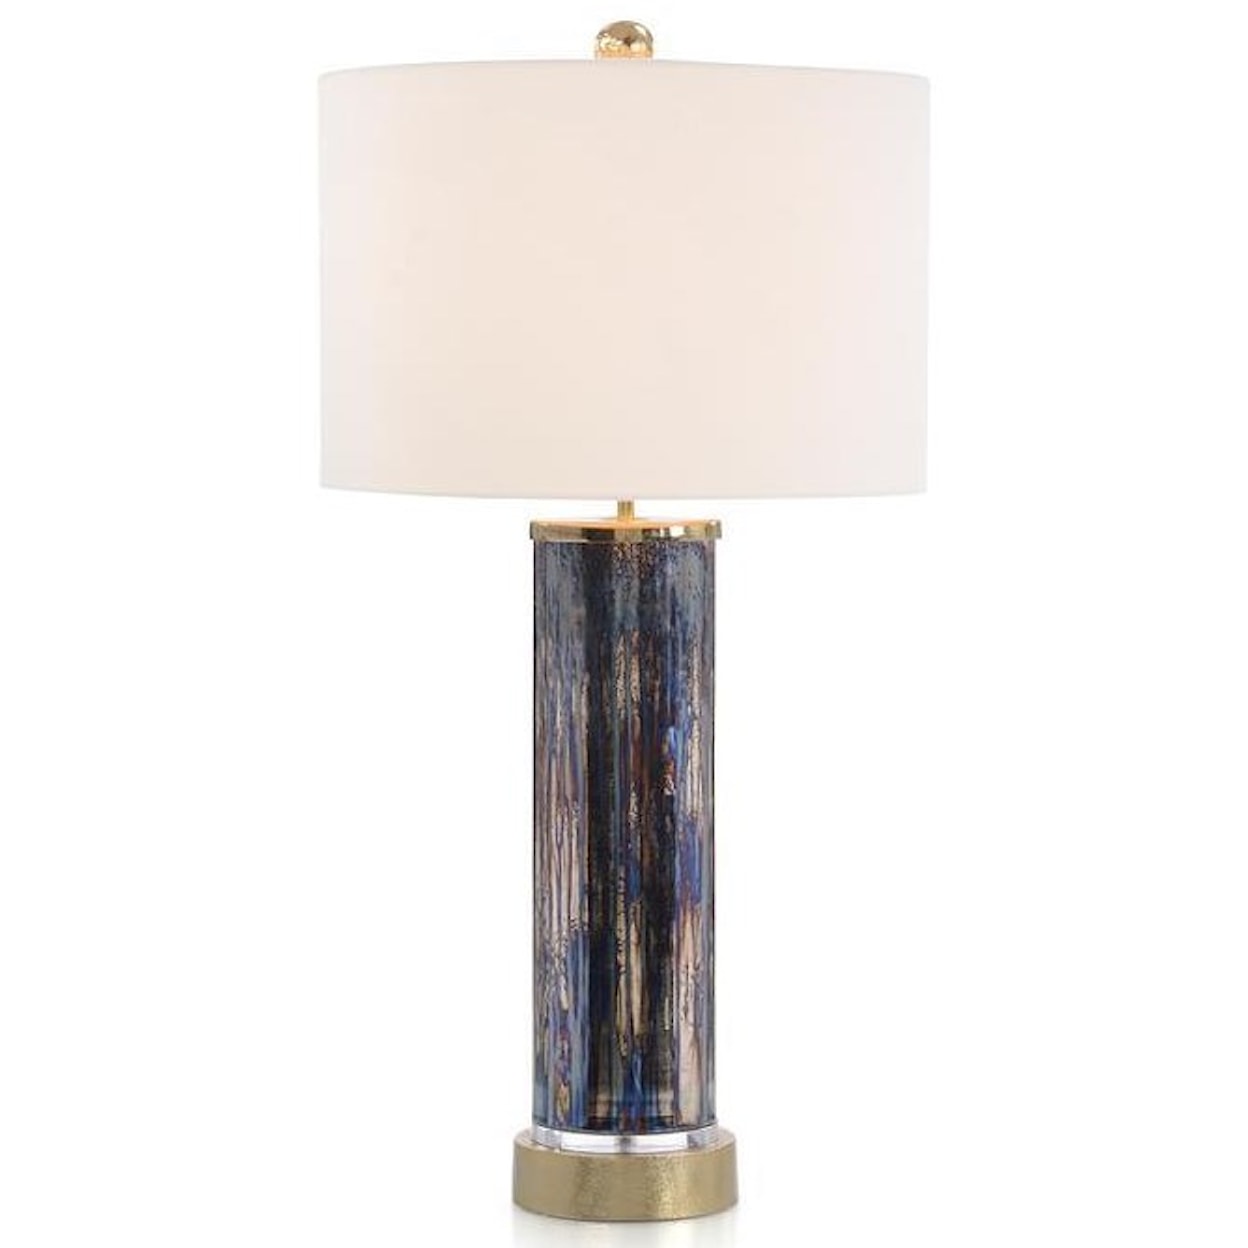 John-Richard Lighting Sapphire and Gold Table Lamp